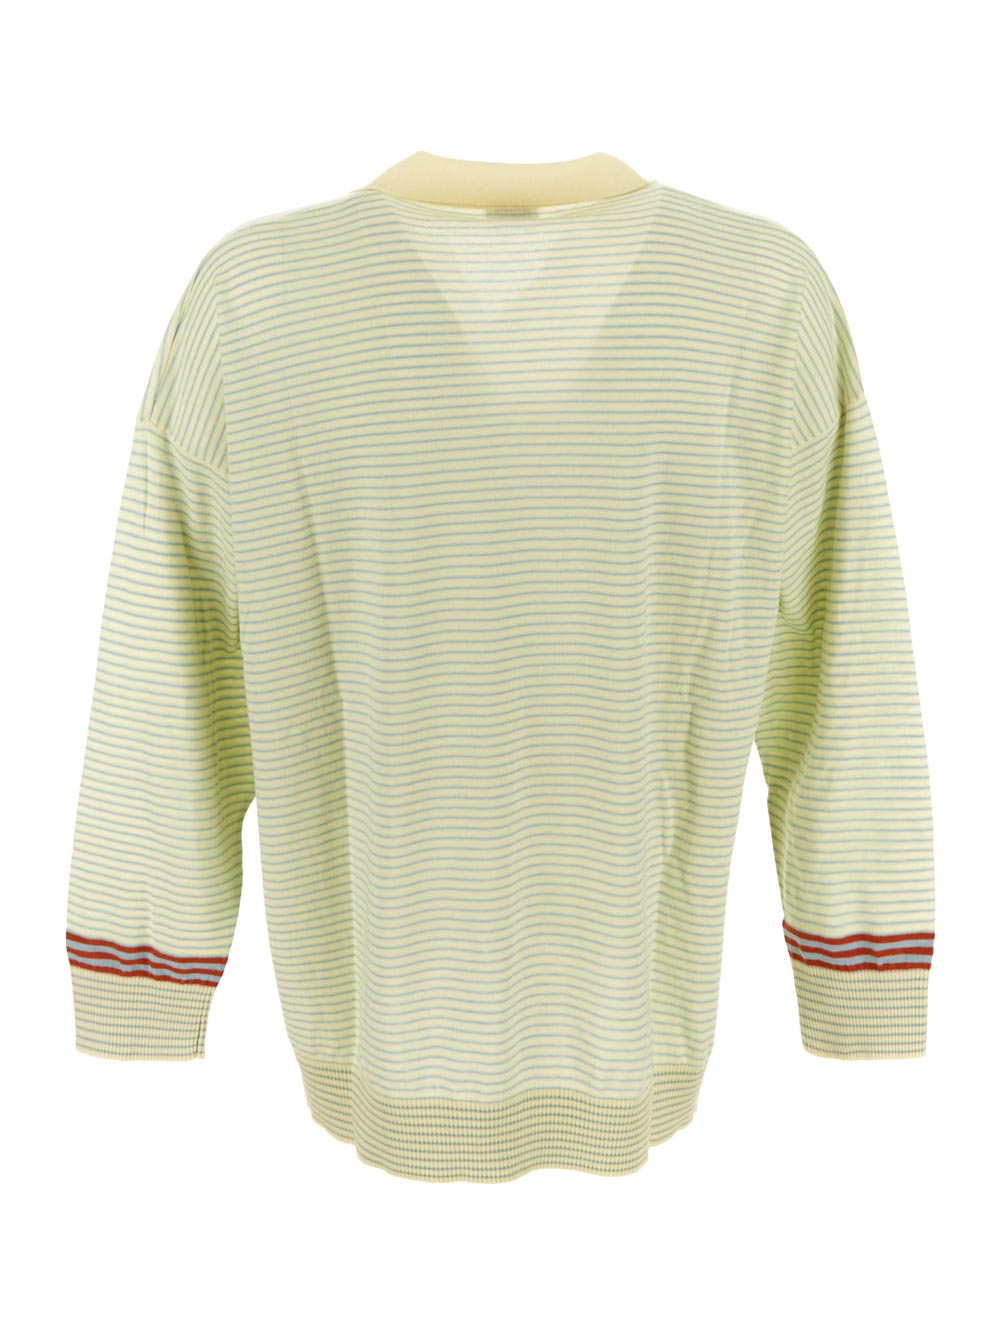 Etro Striped Knit Polo Shirt